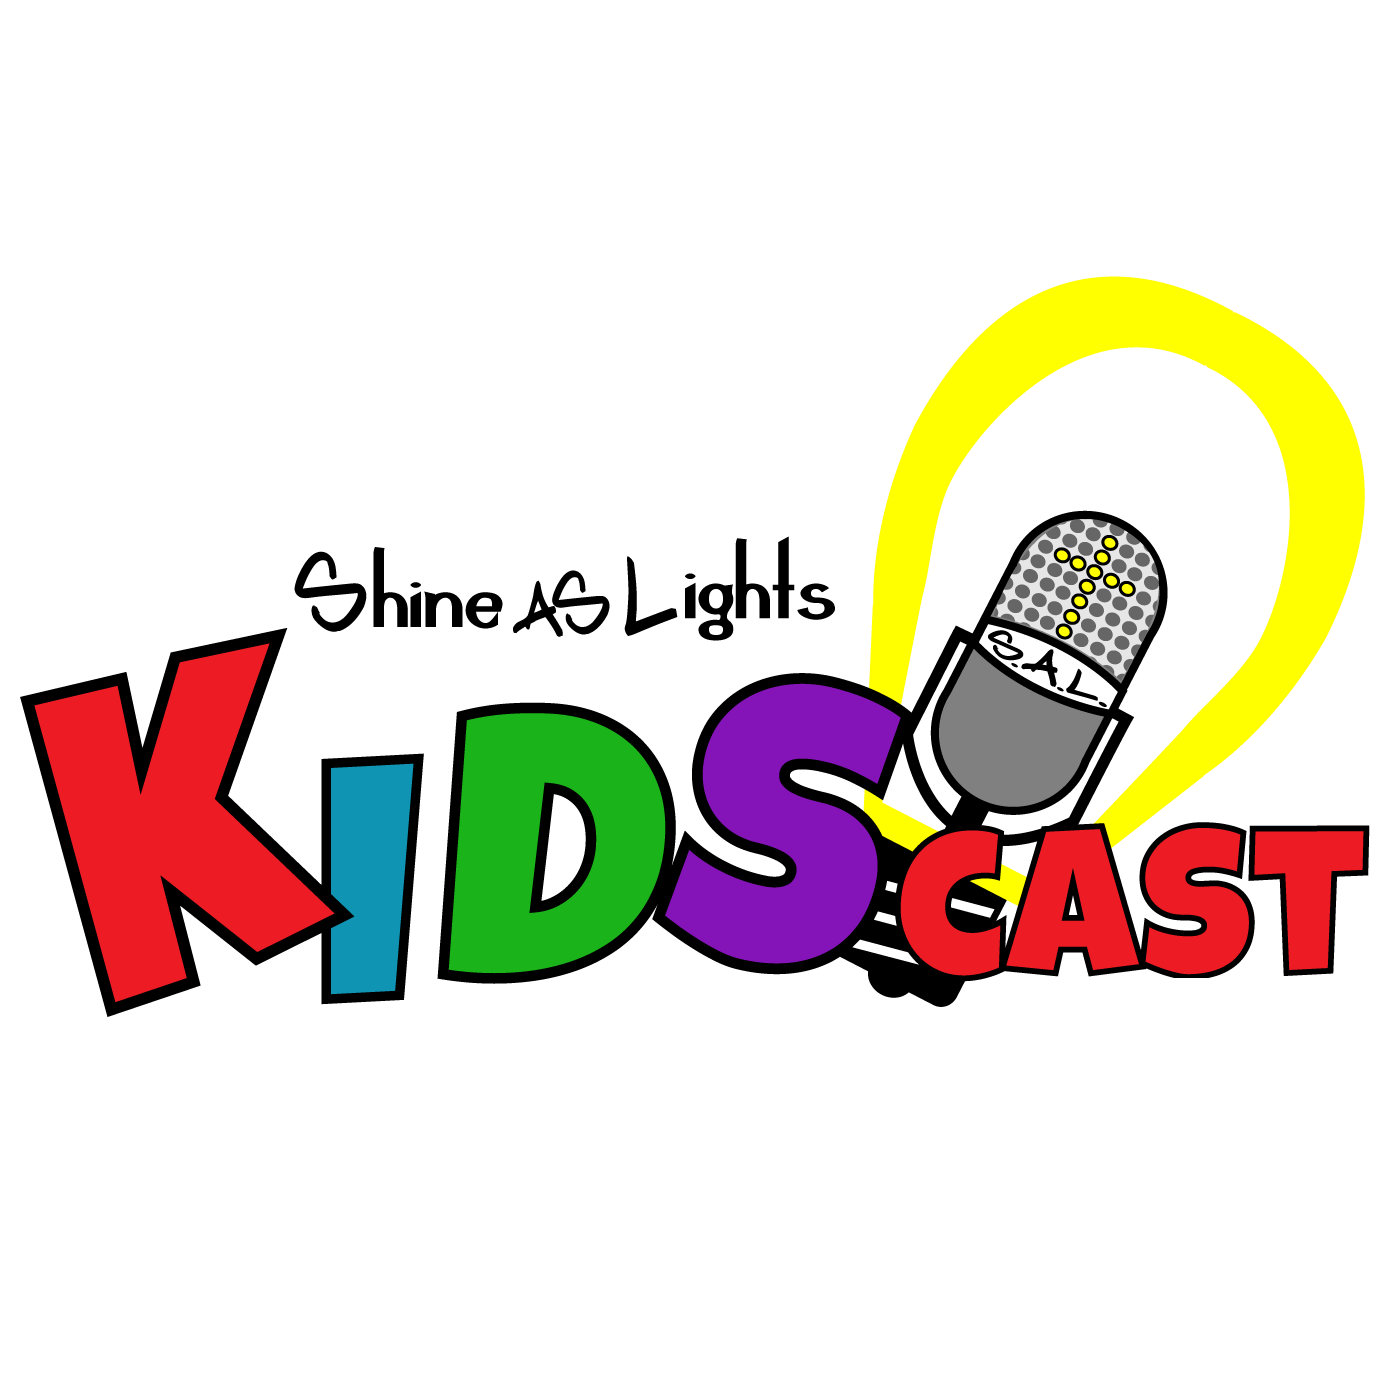 Shine As Lights Kidscast.png